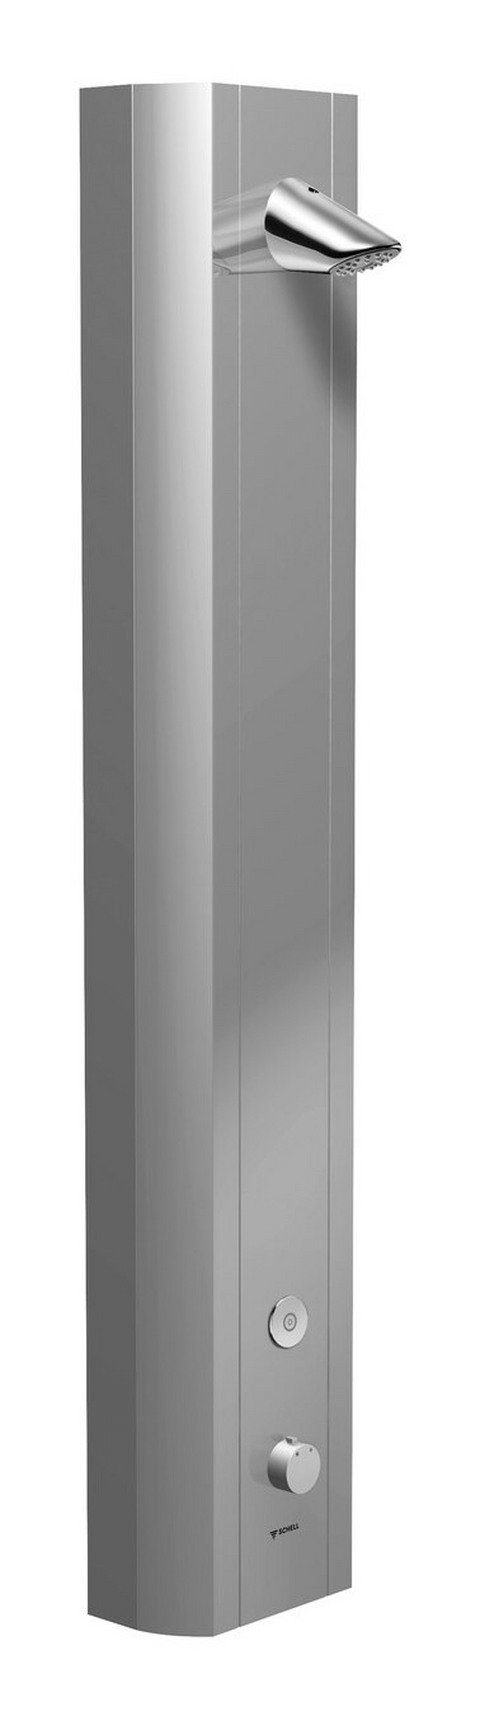 Schell Duschsäule Linus, Höhe 120 cm, Duschpaneel Thermostat m. Duschkopf COMFORT CVD-Touch-Elektronik